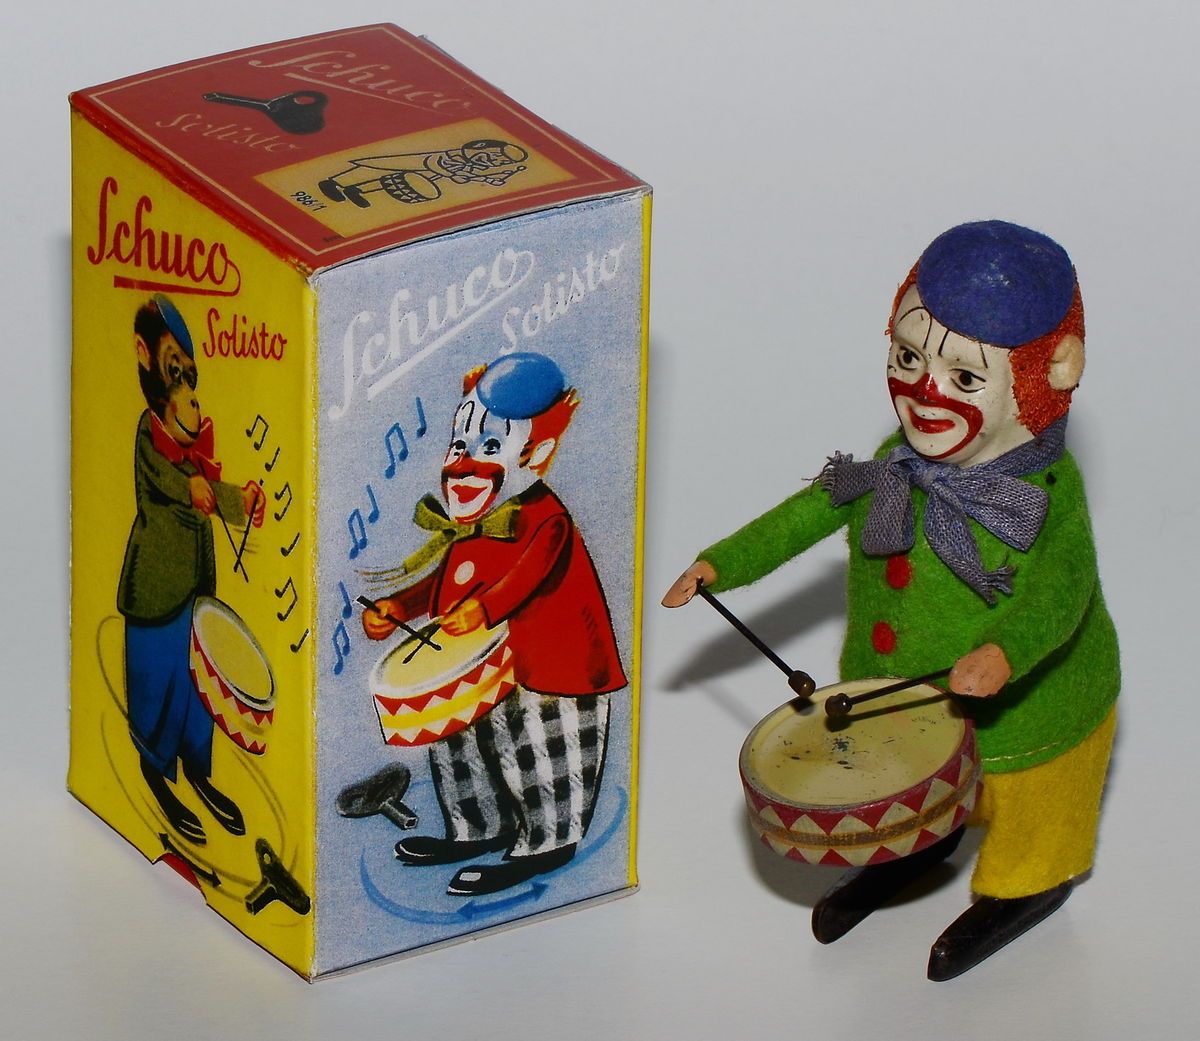 Schuco Tanzfigur Solisto 986/1   Clown mit Trommel in Reprobox